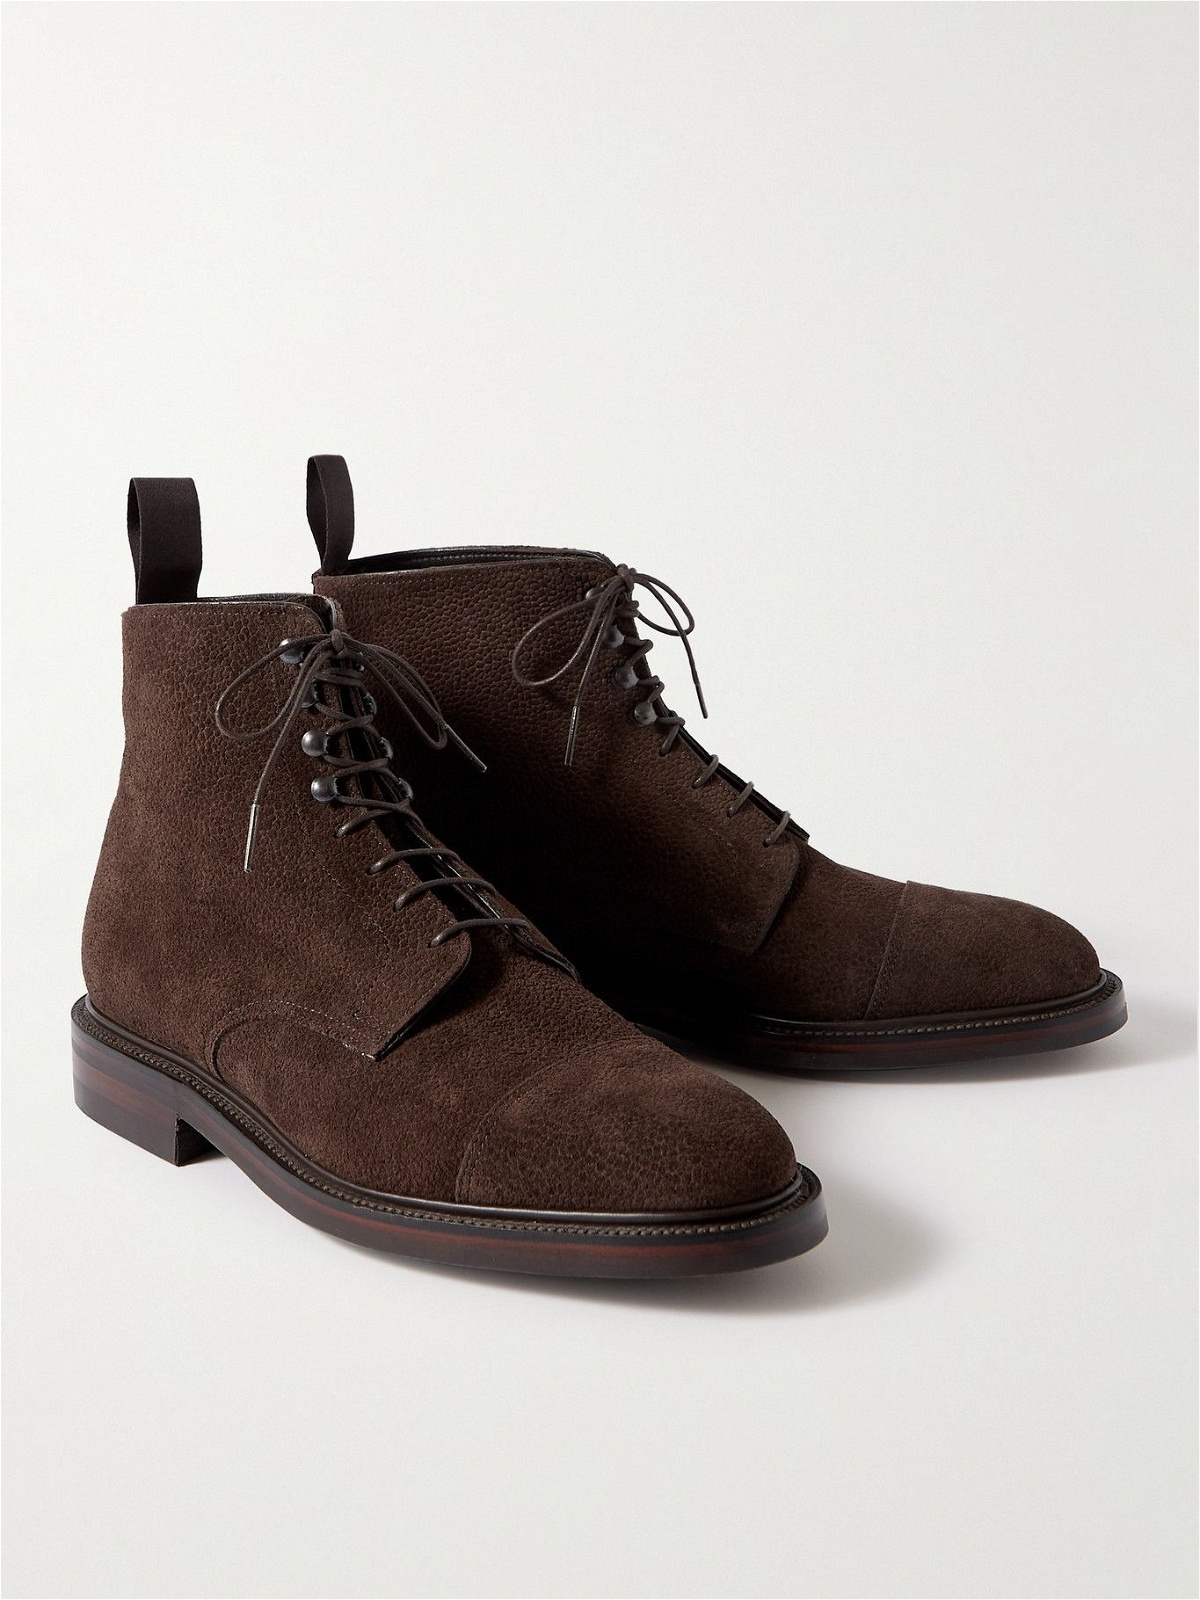 Kingsman - George Cleverley Taron Cap-Toe Pebble-Grain Leather Boots ...